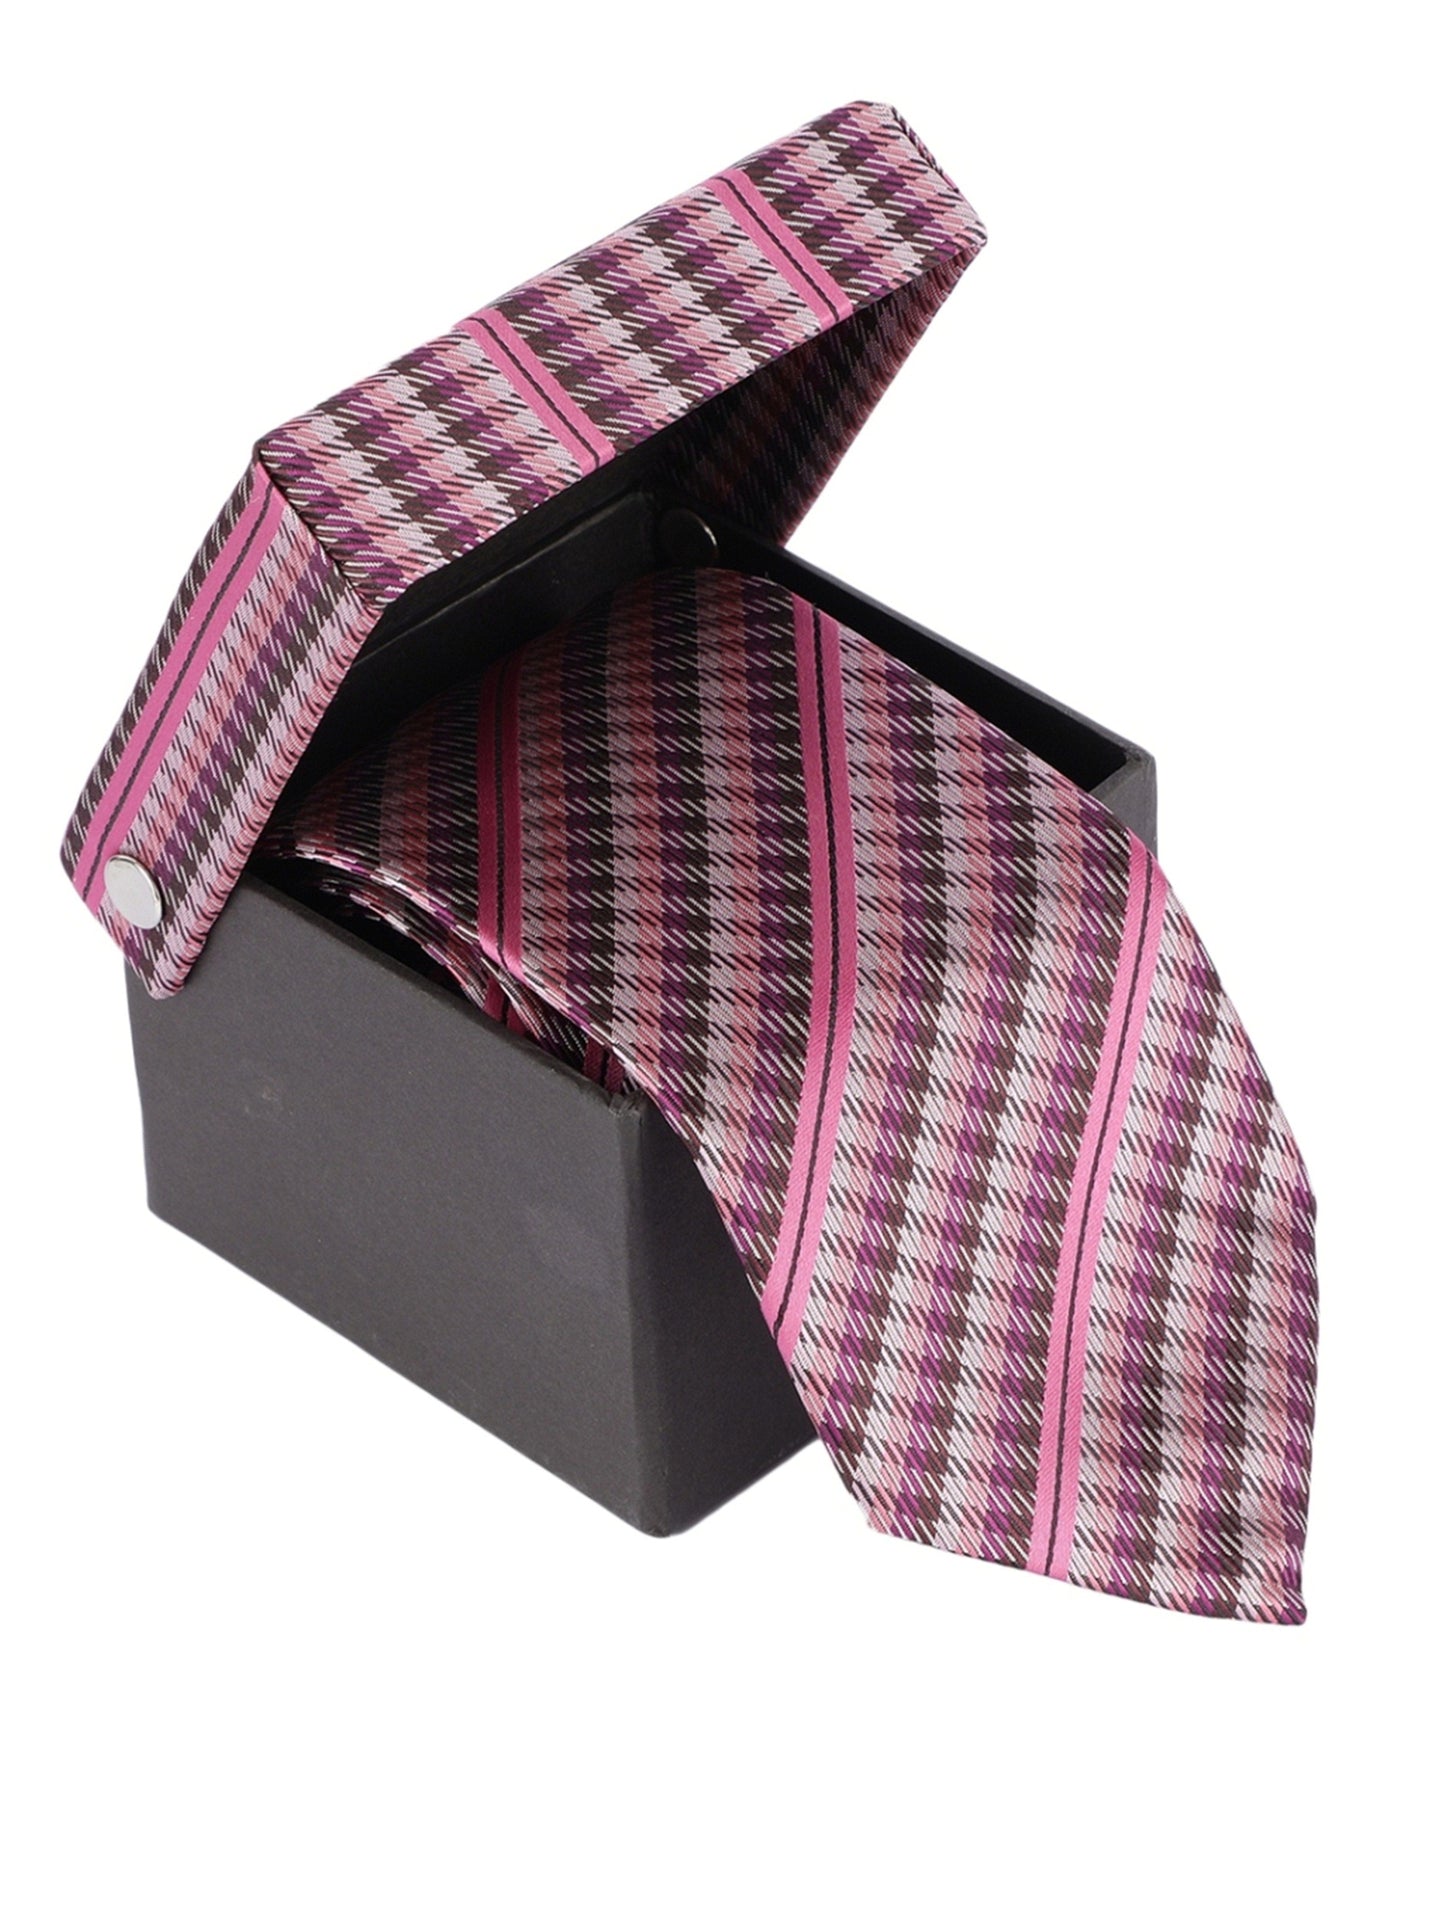 Alvaro Castagnino Microfiber Pink::Multi Colored Solid Necktie for Men